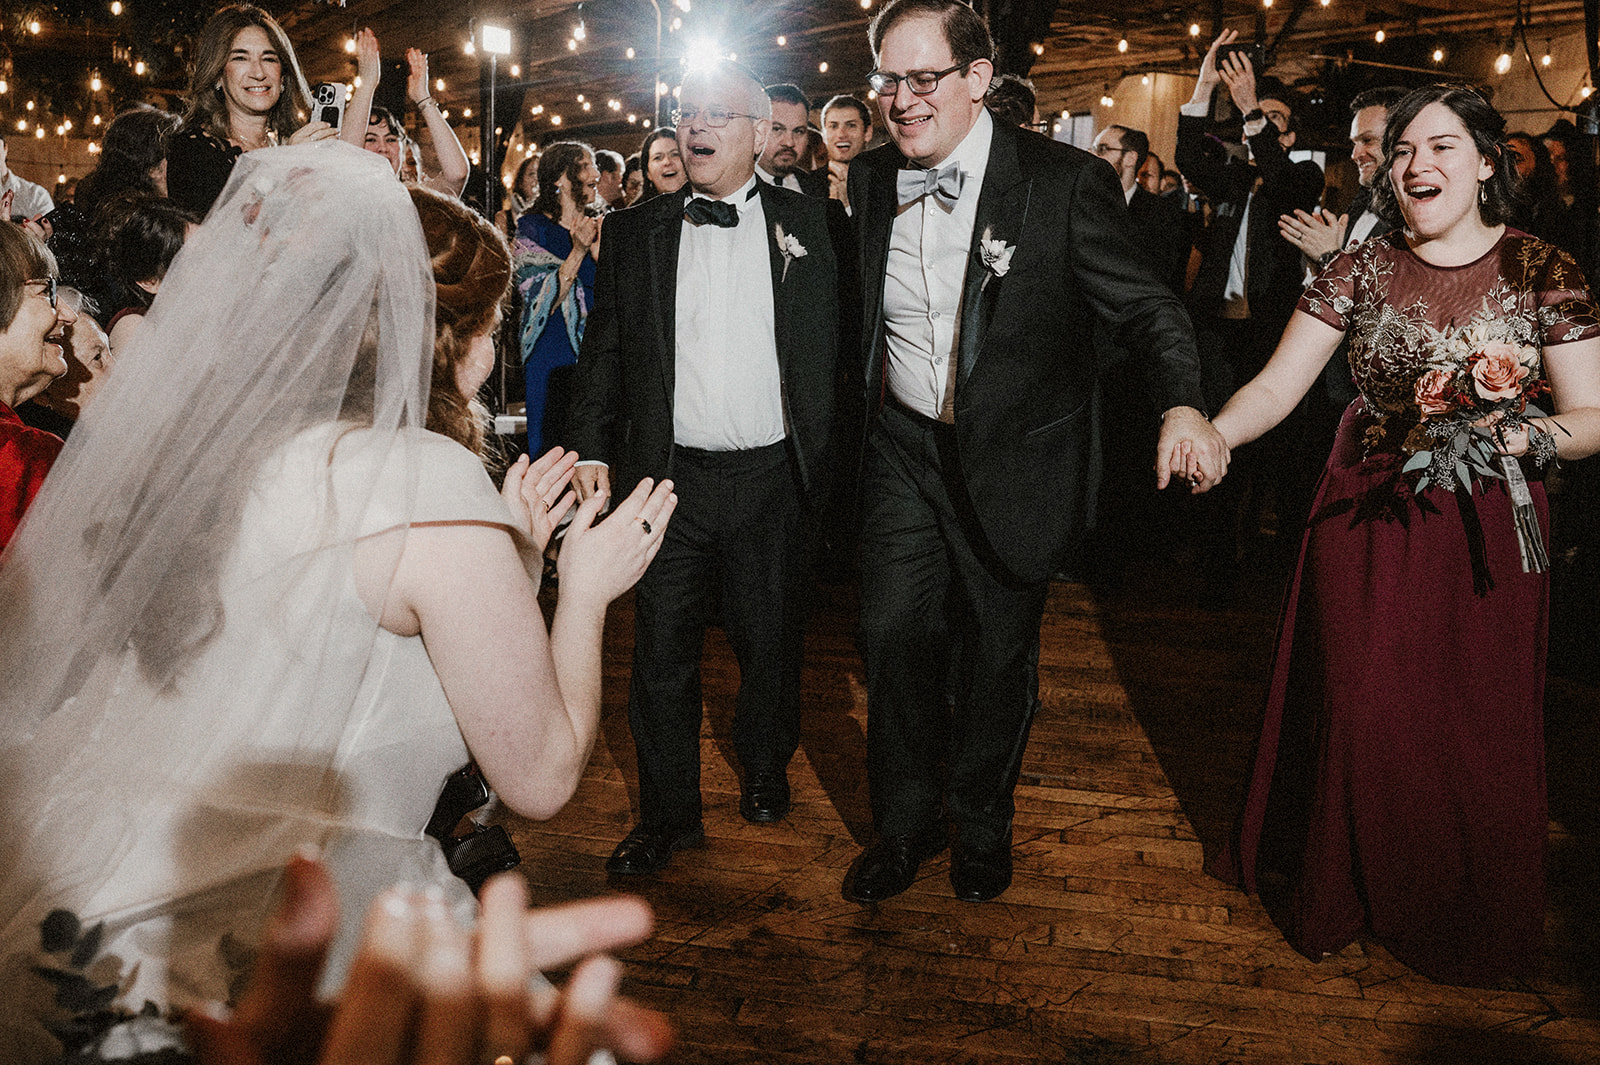 groom approaching bride in joyful moment of bedeken during modern orthodox jewish wedding at art factory